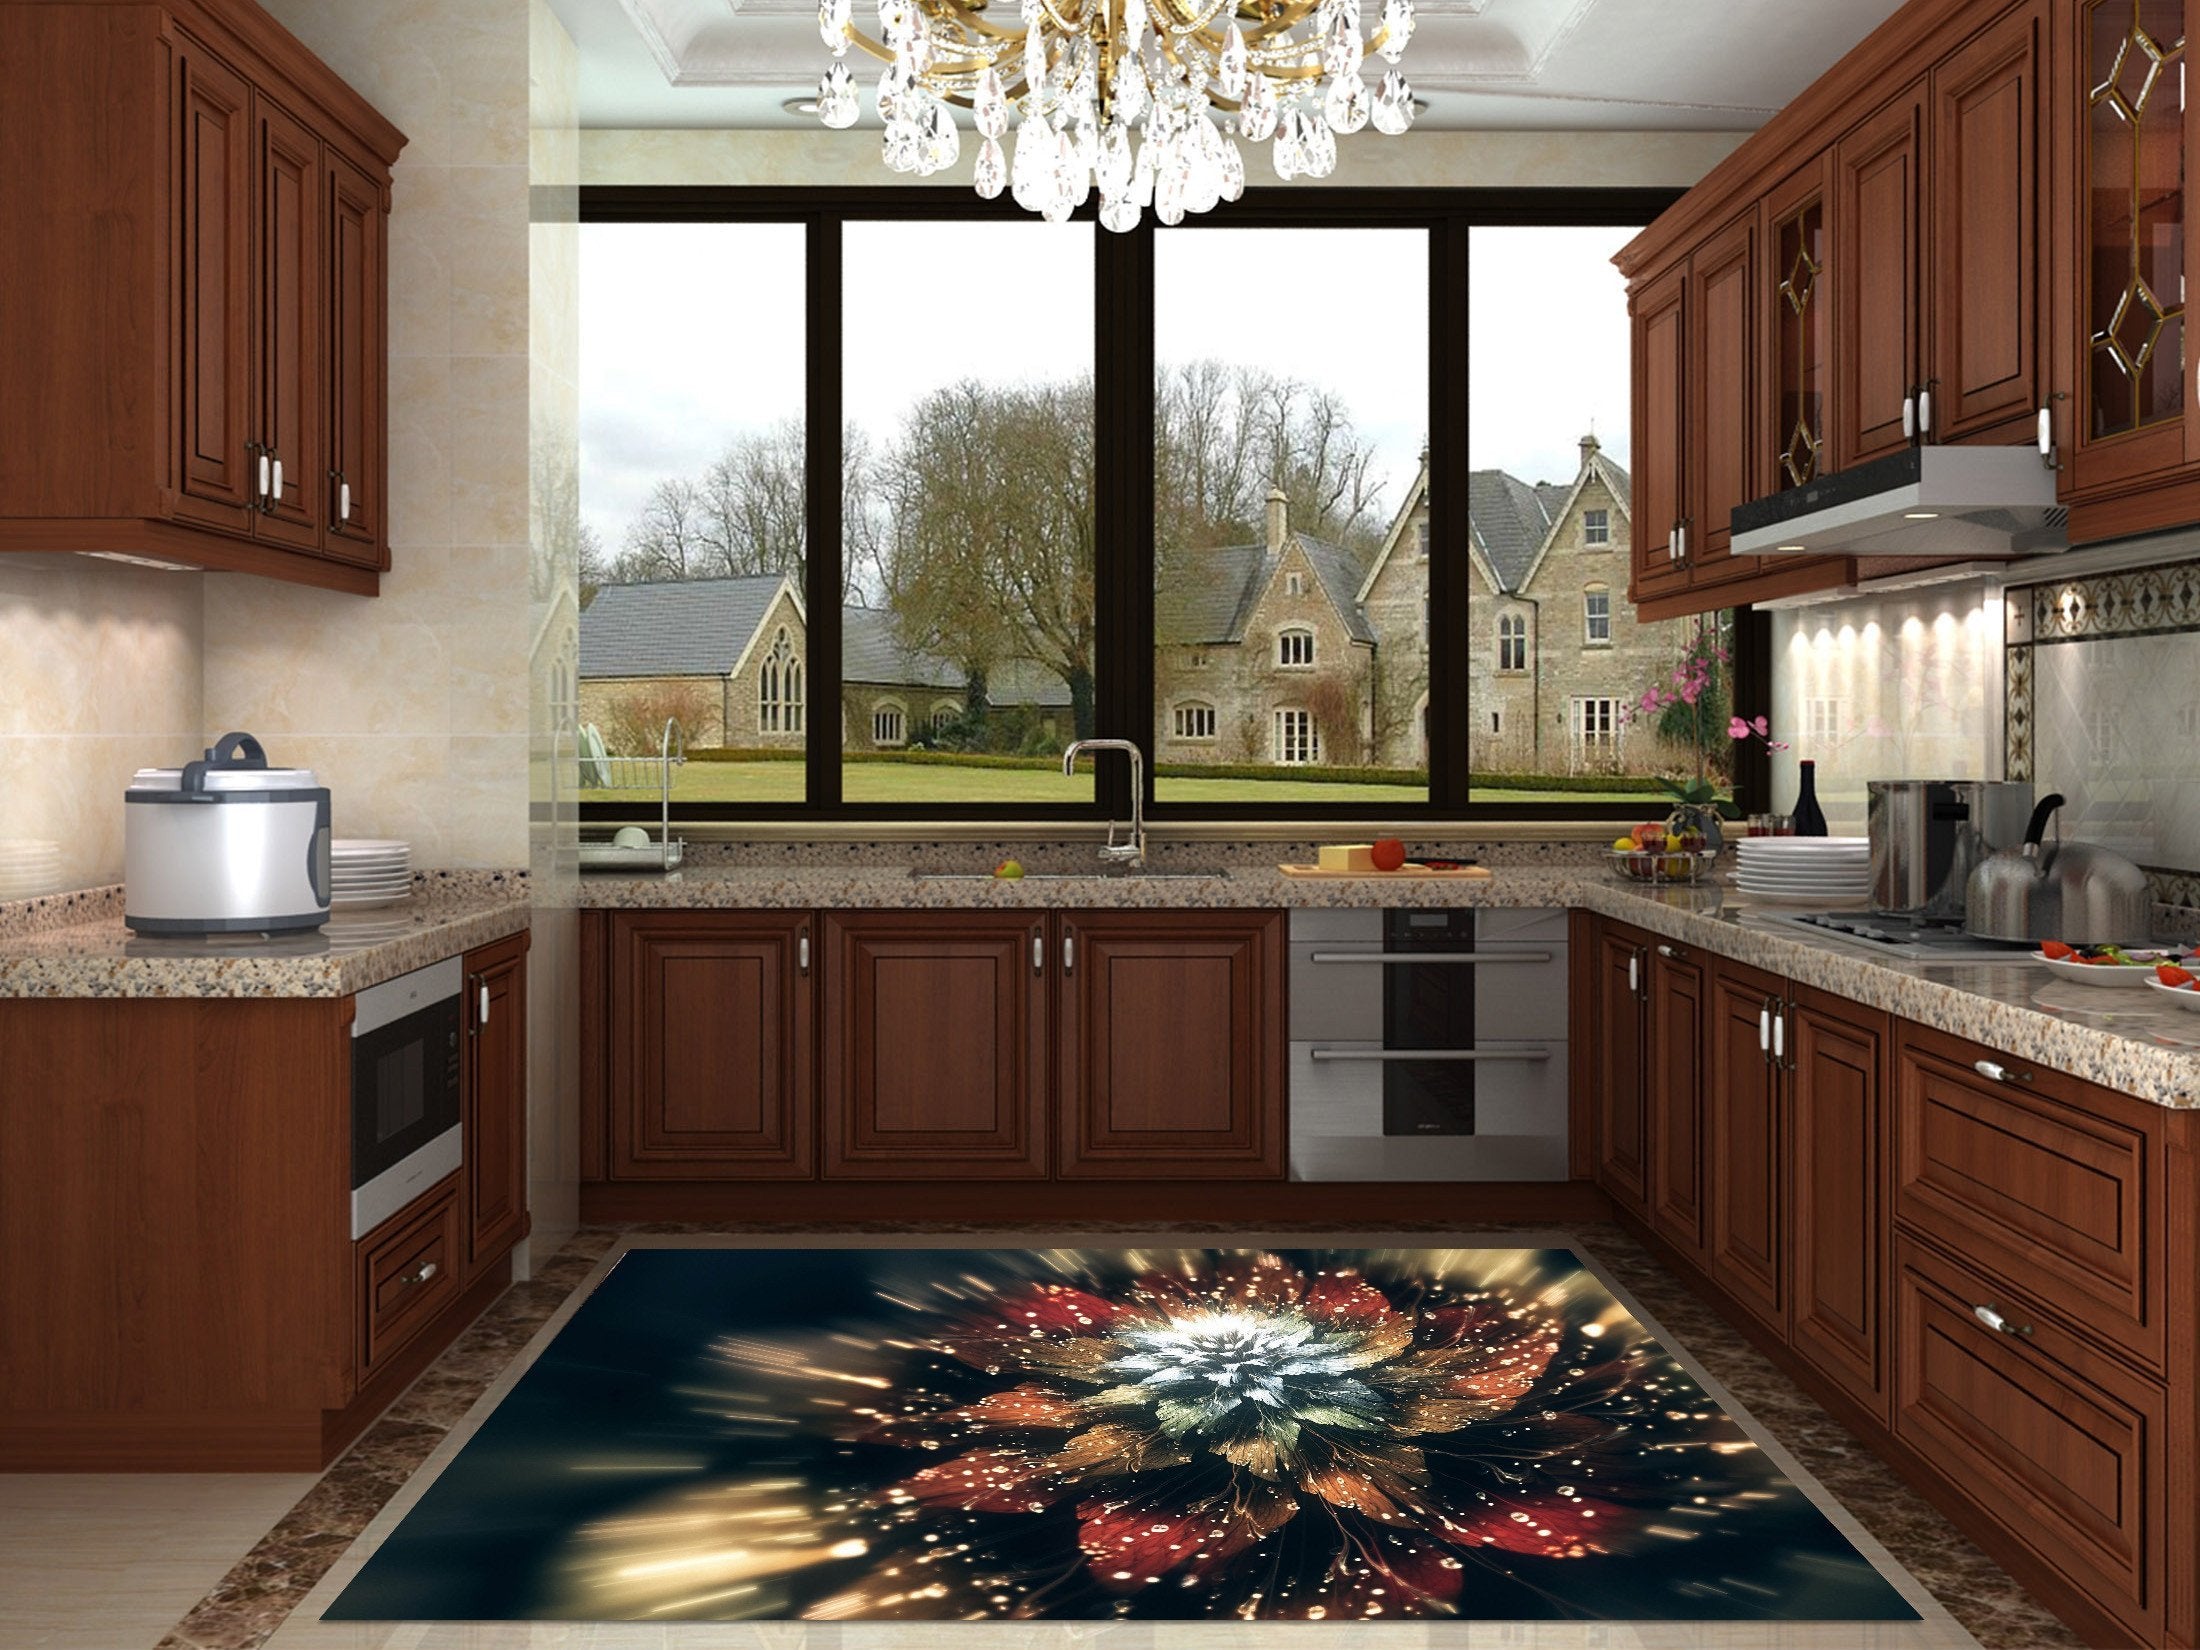 3D Shining Flower Kitchen Mat Floor Mural Wallpaper AJ Wallpaper 